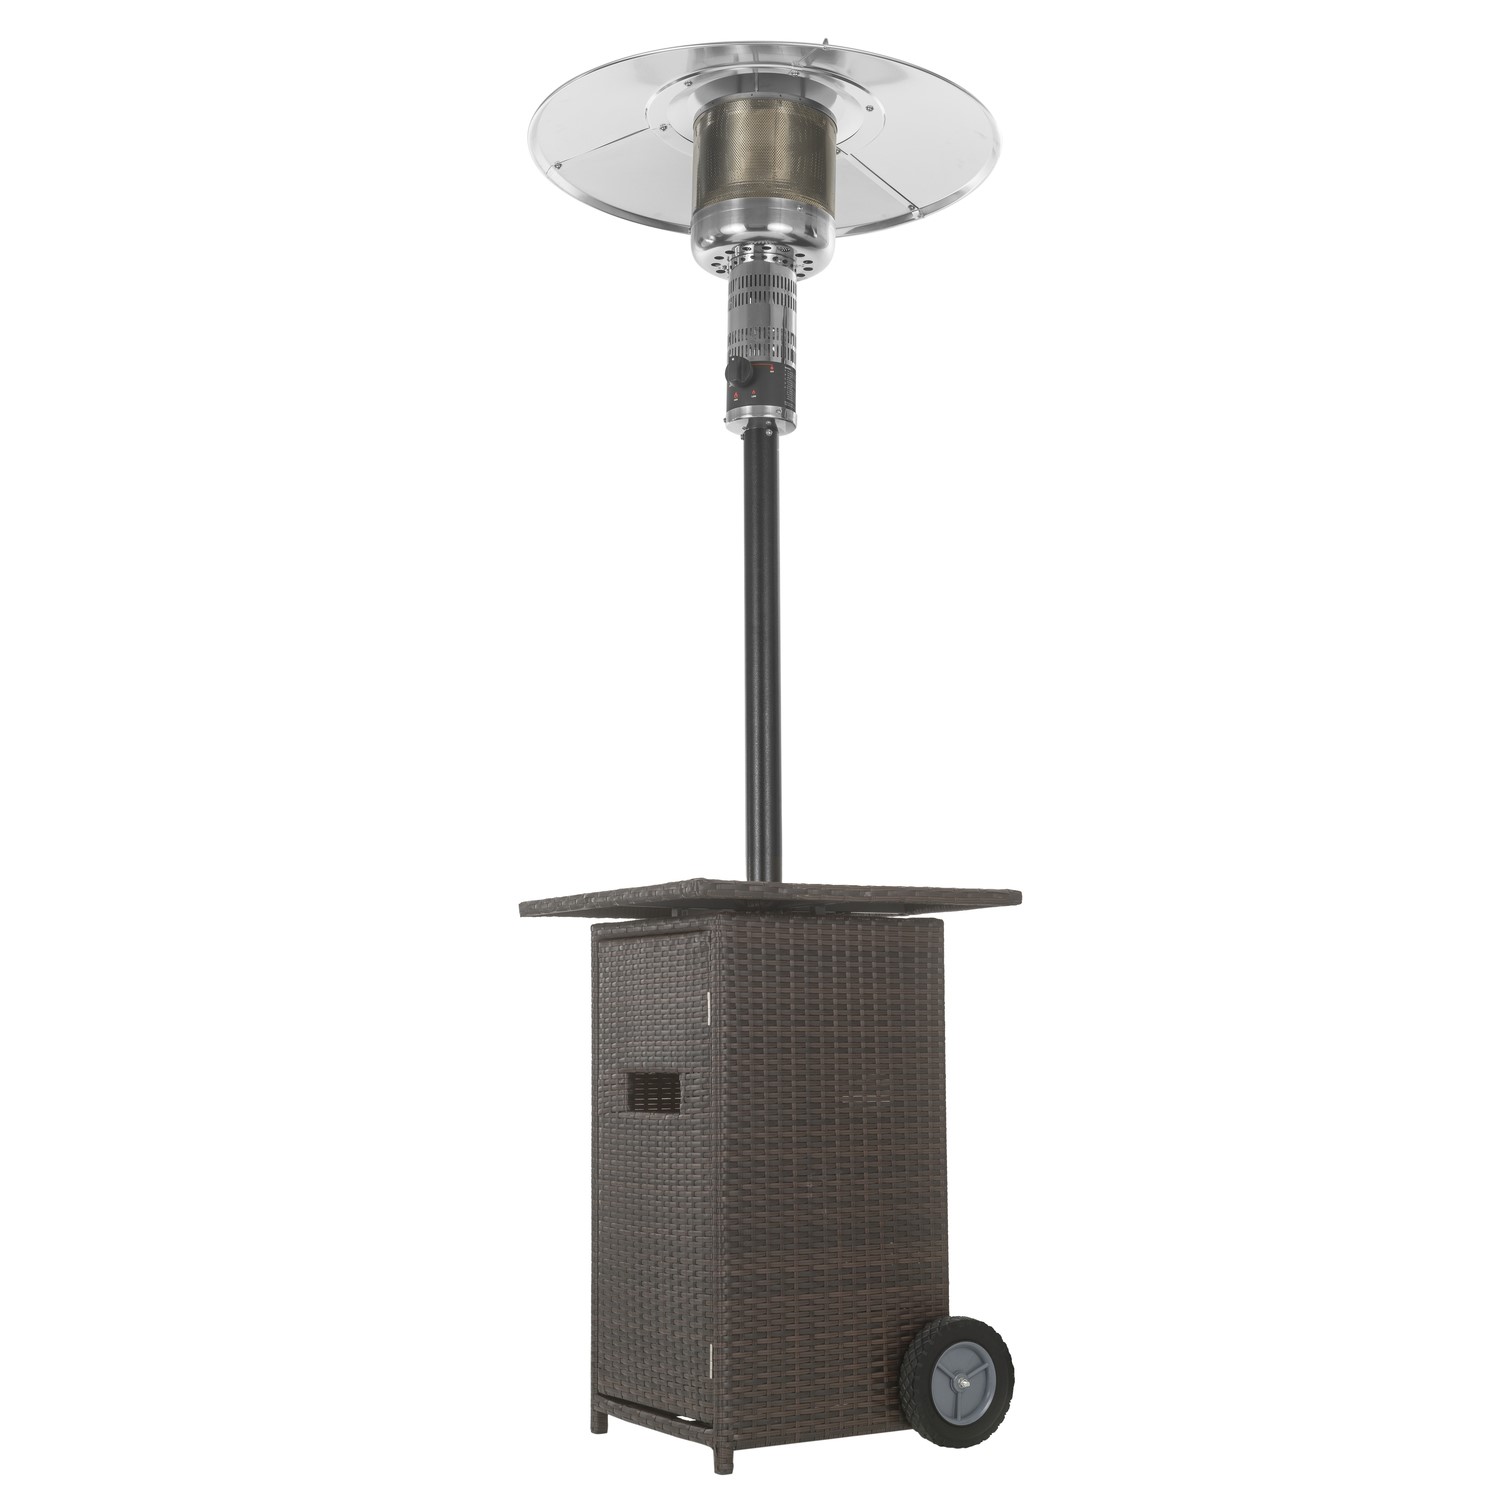 Mushroom Style Outdoor Gas Patio Heater in Brown Wicker/Ratten